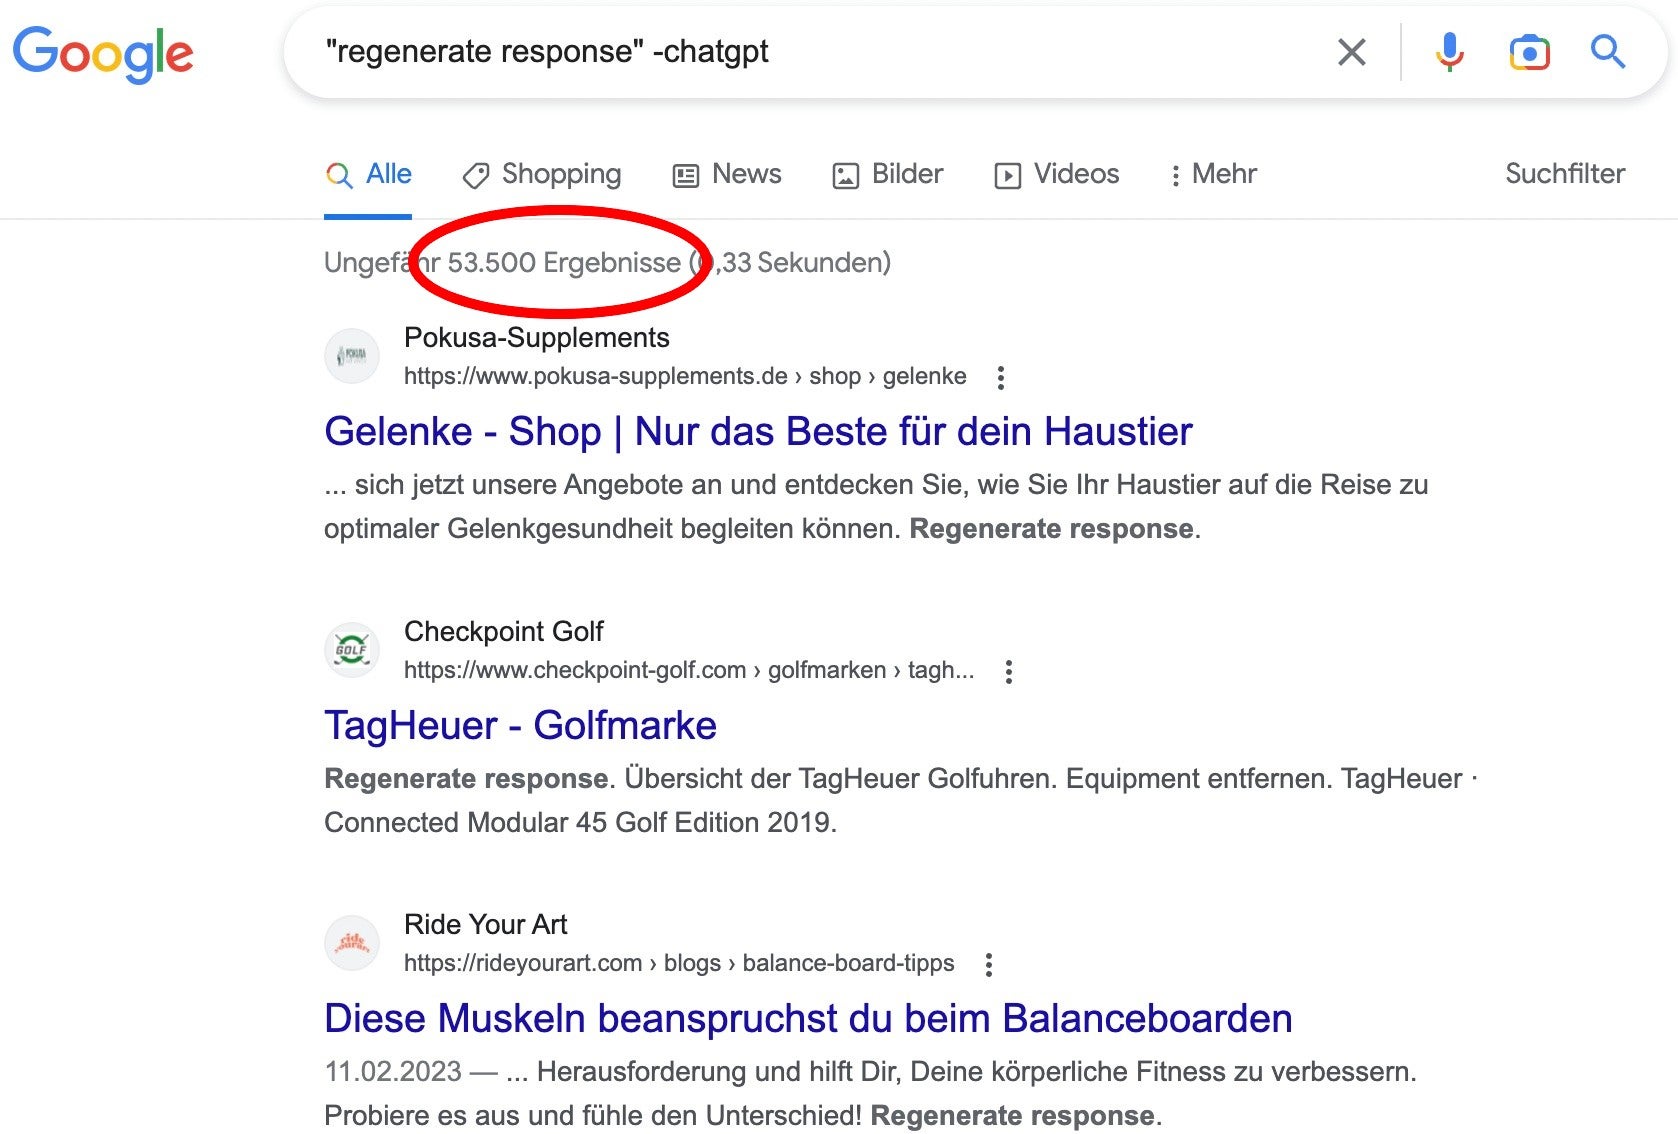 Google-Suche nach "'regenerate response' -chatgpt"